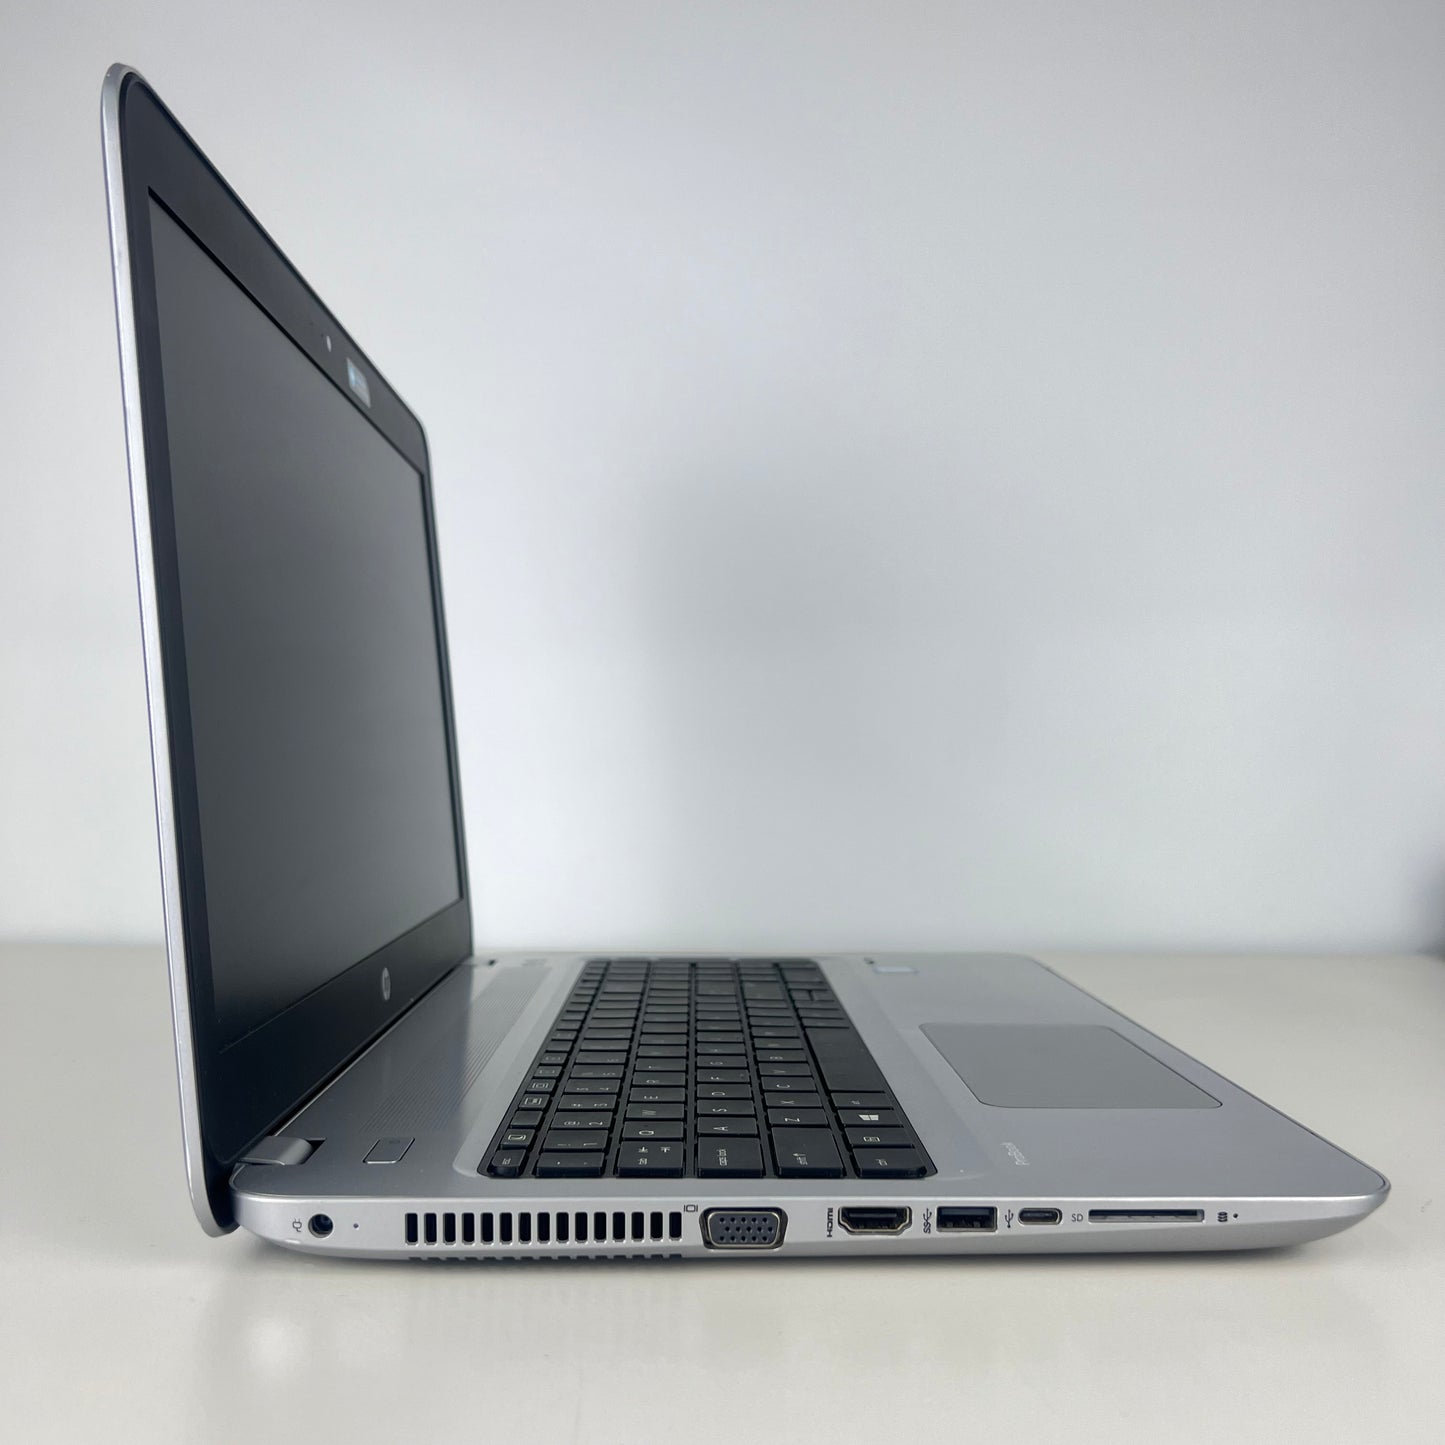 HP ProBook 450 G4 Laptop